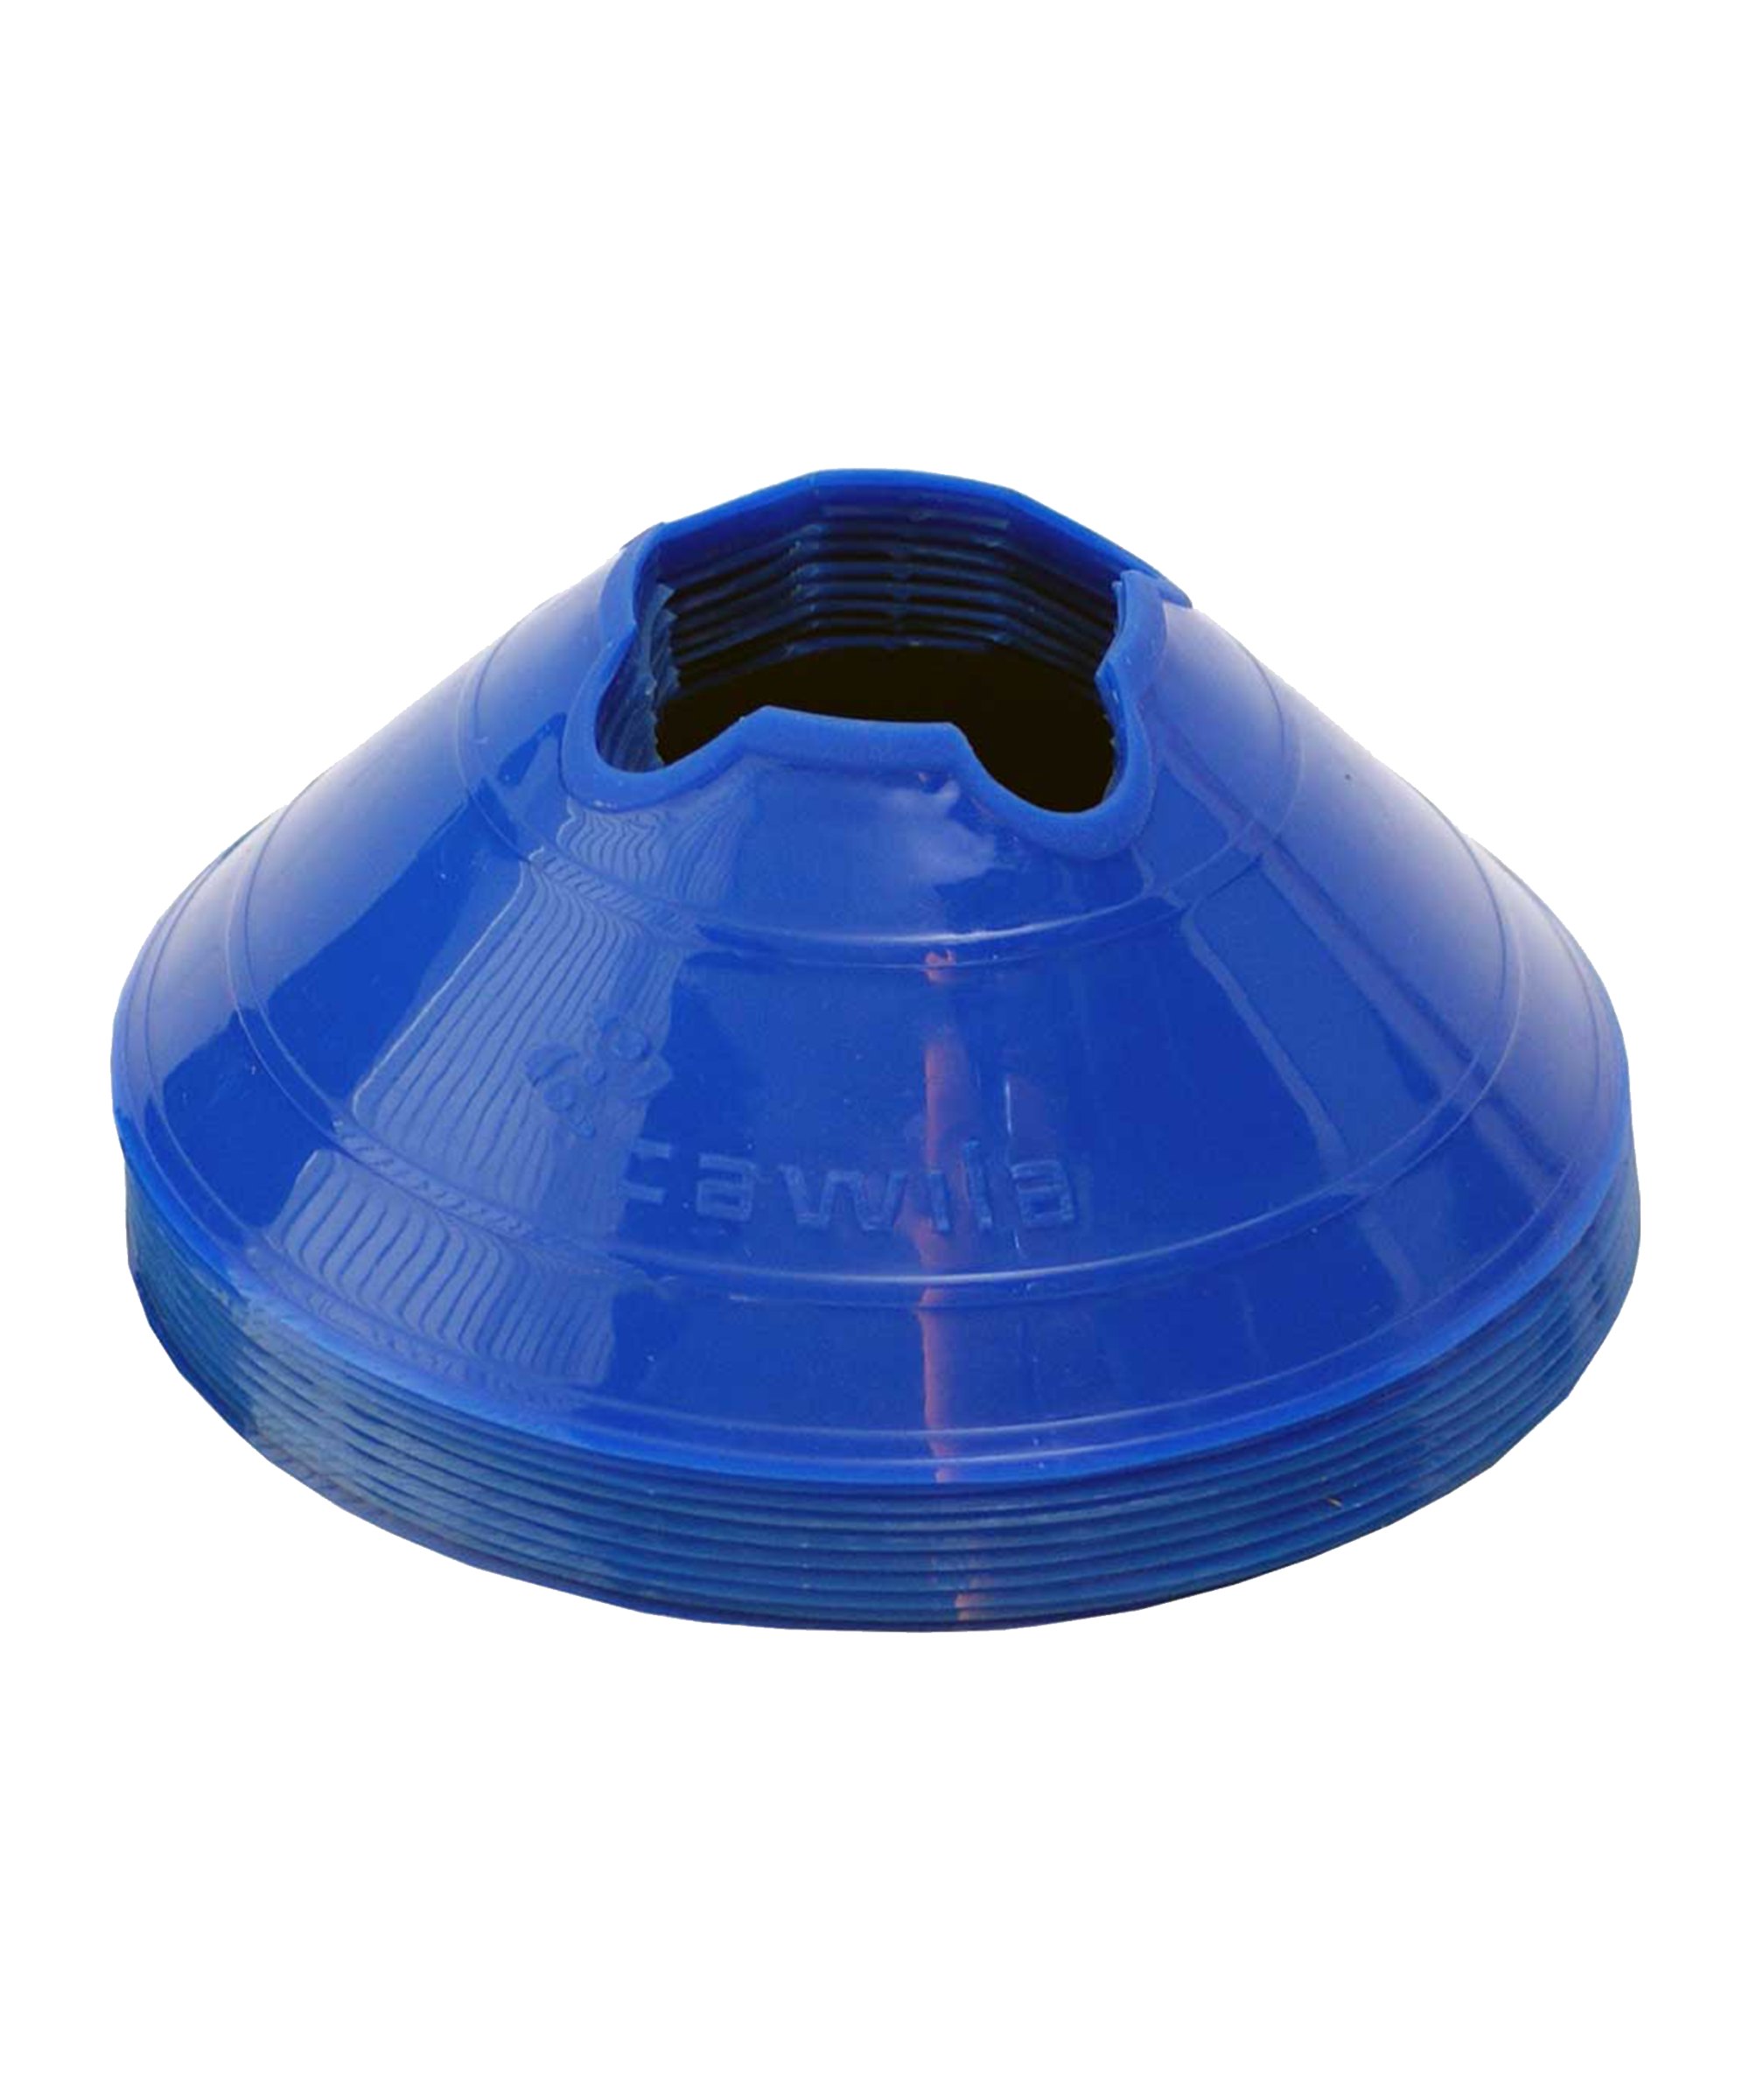 Cawila Markierungshauben M | 10er Set | Durchmesser 20cm, Höhe 6cm | blau - blau